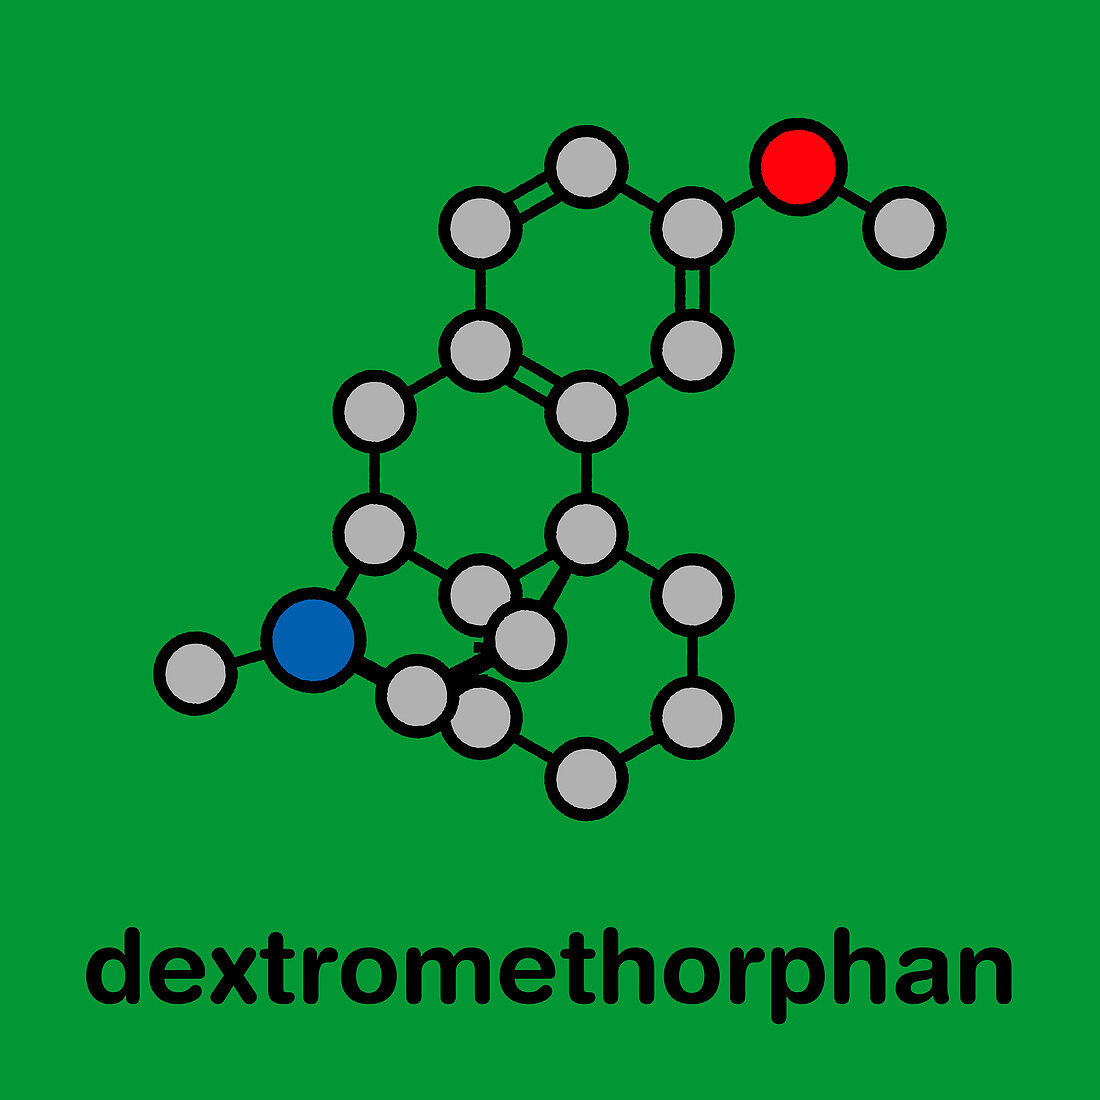 Dextromethorphan cough suppressant drug, molecular model